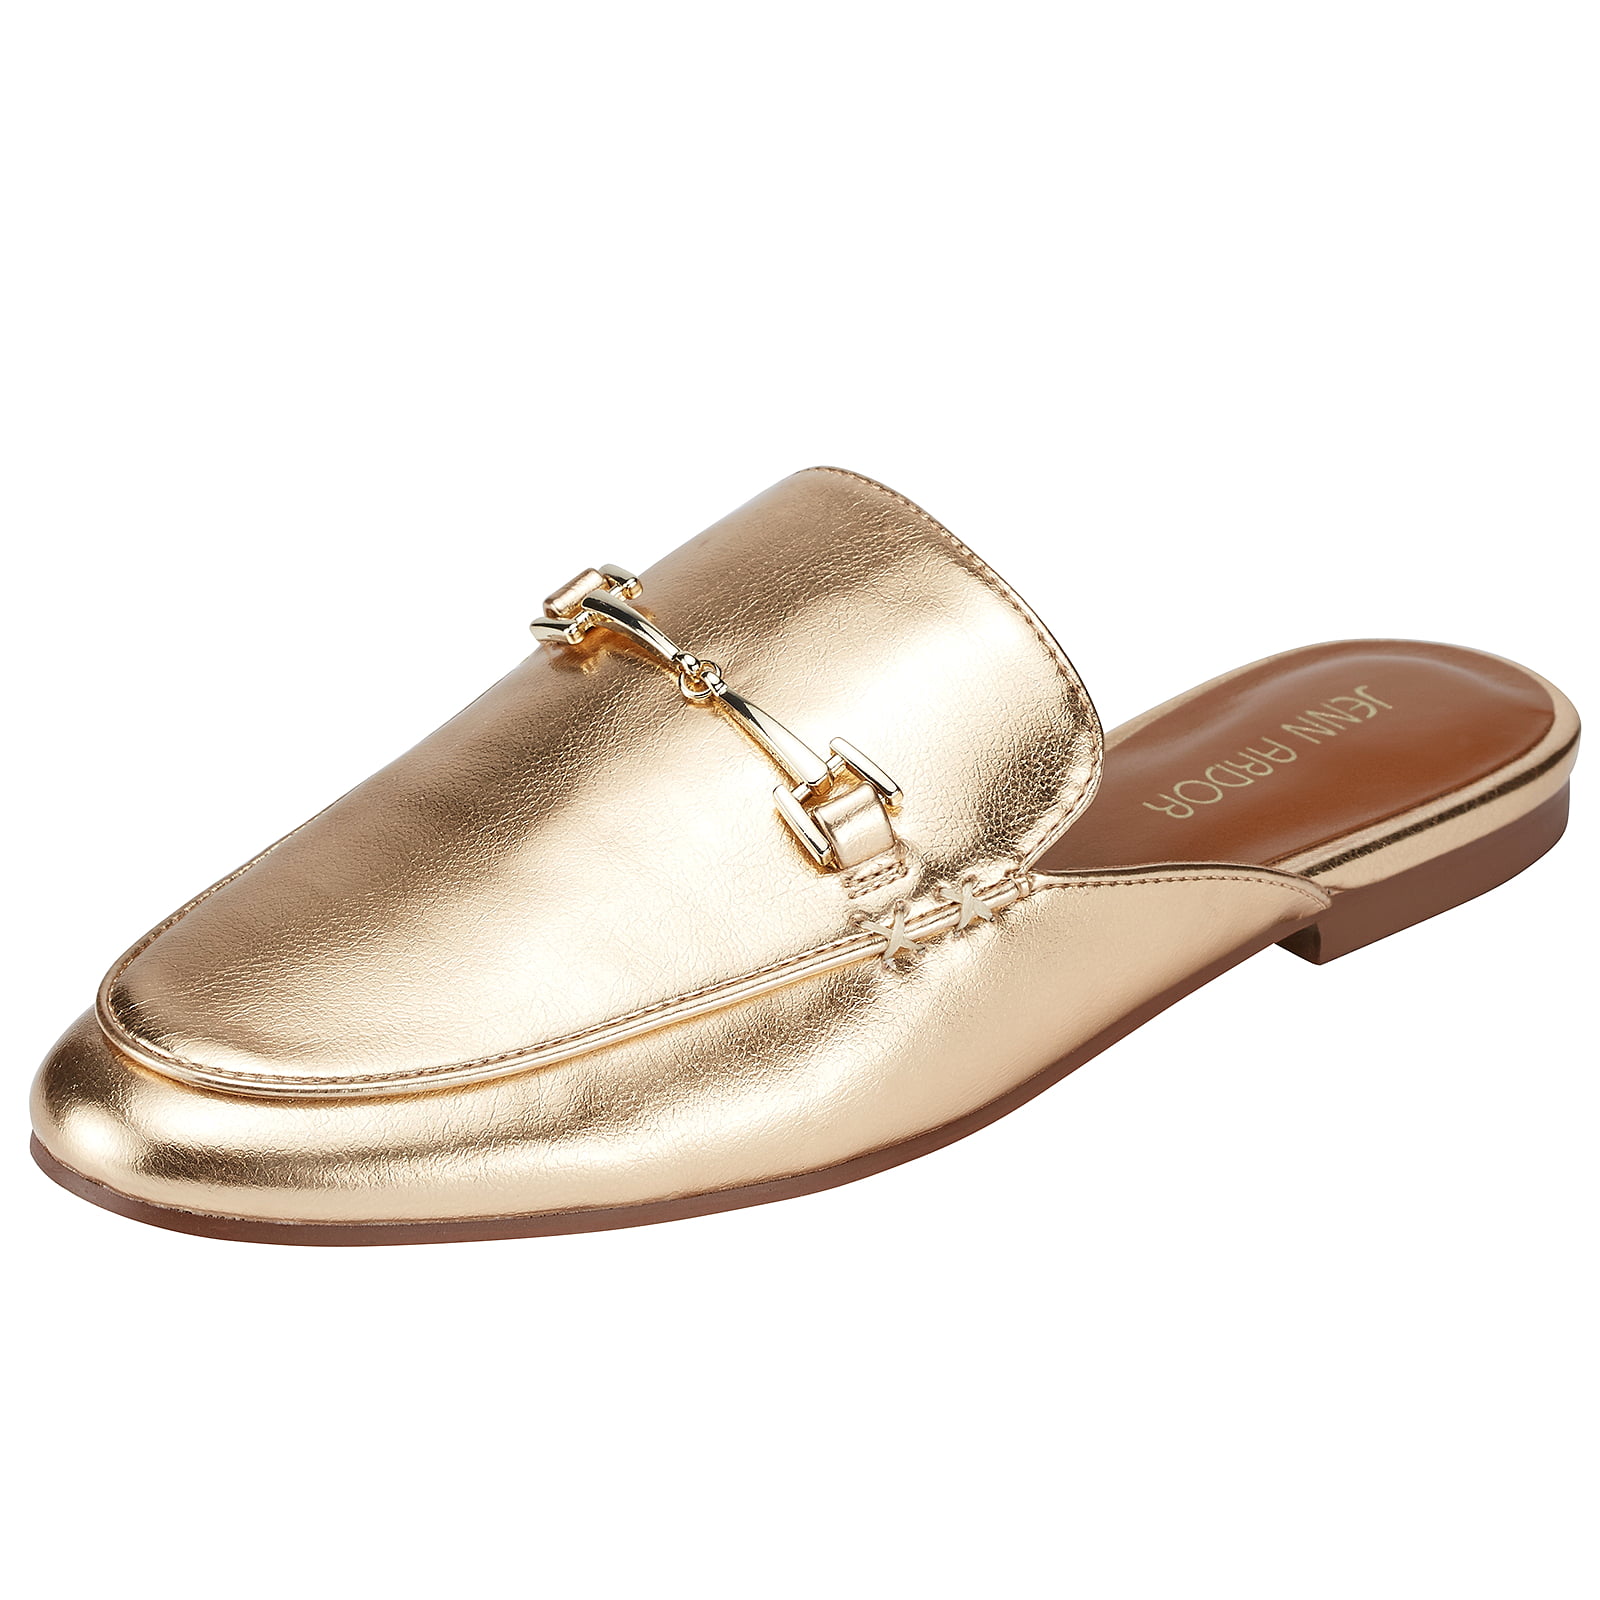 JENN ARDOR Women's Mule Flats Shoes Pointed Toe Backless Slipper Slip On Loafer Shoes 